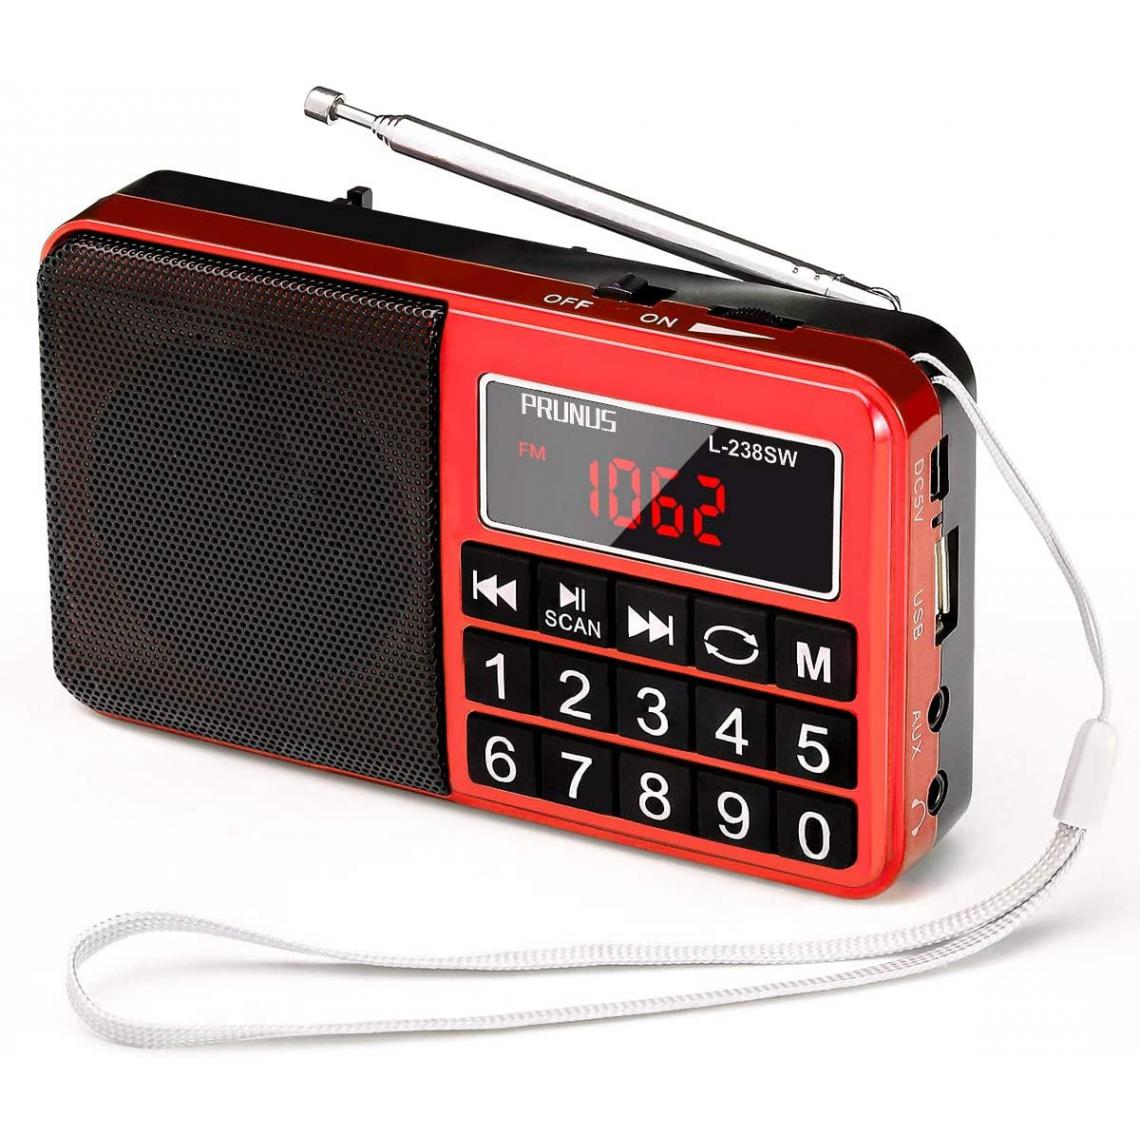 Prunus - radio portable FM AM (MW) SW USB Micro-SD MP3 avec batterie rechargeable 1200 mAh noir rouge - Radio